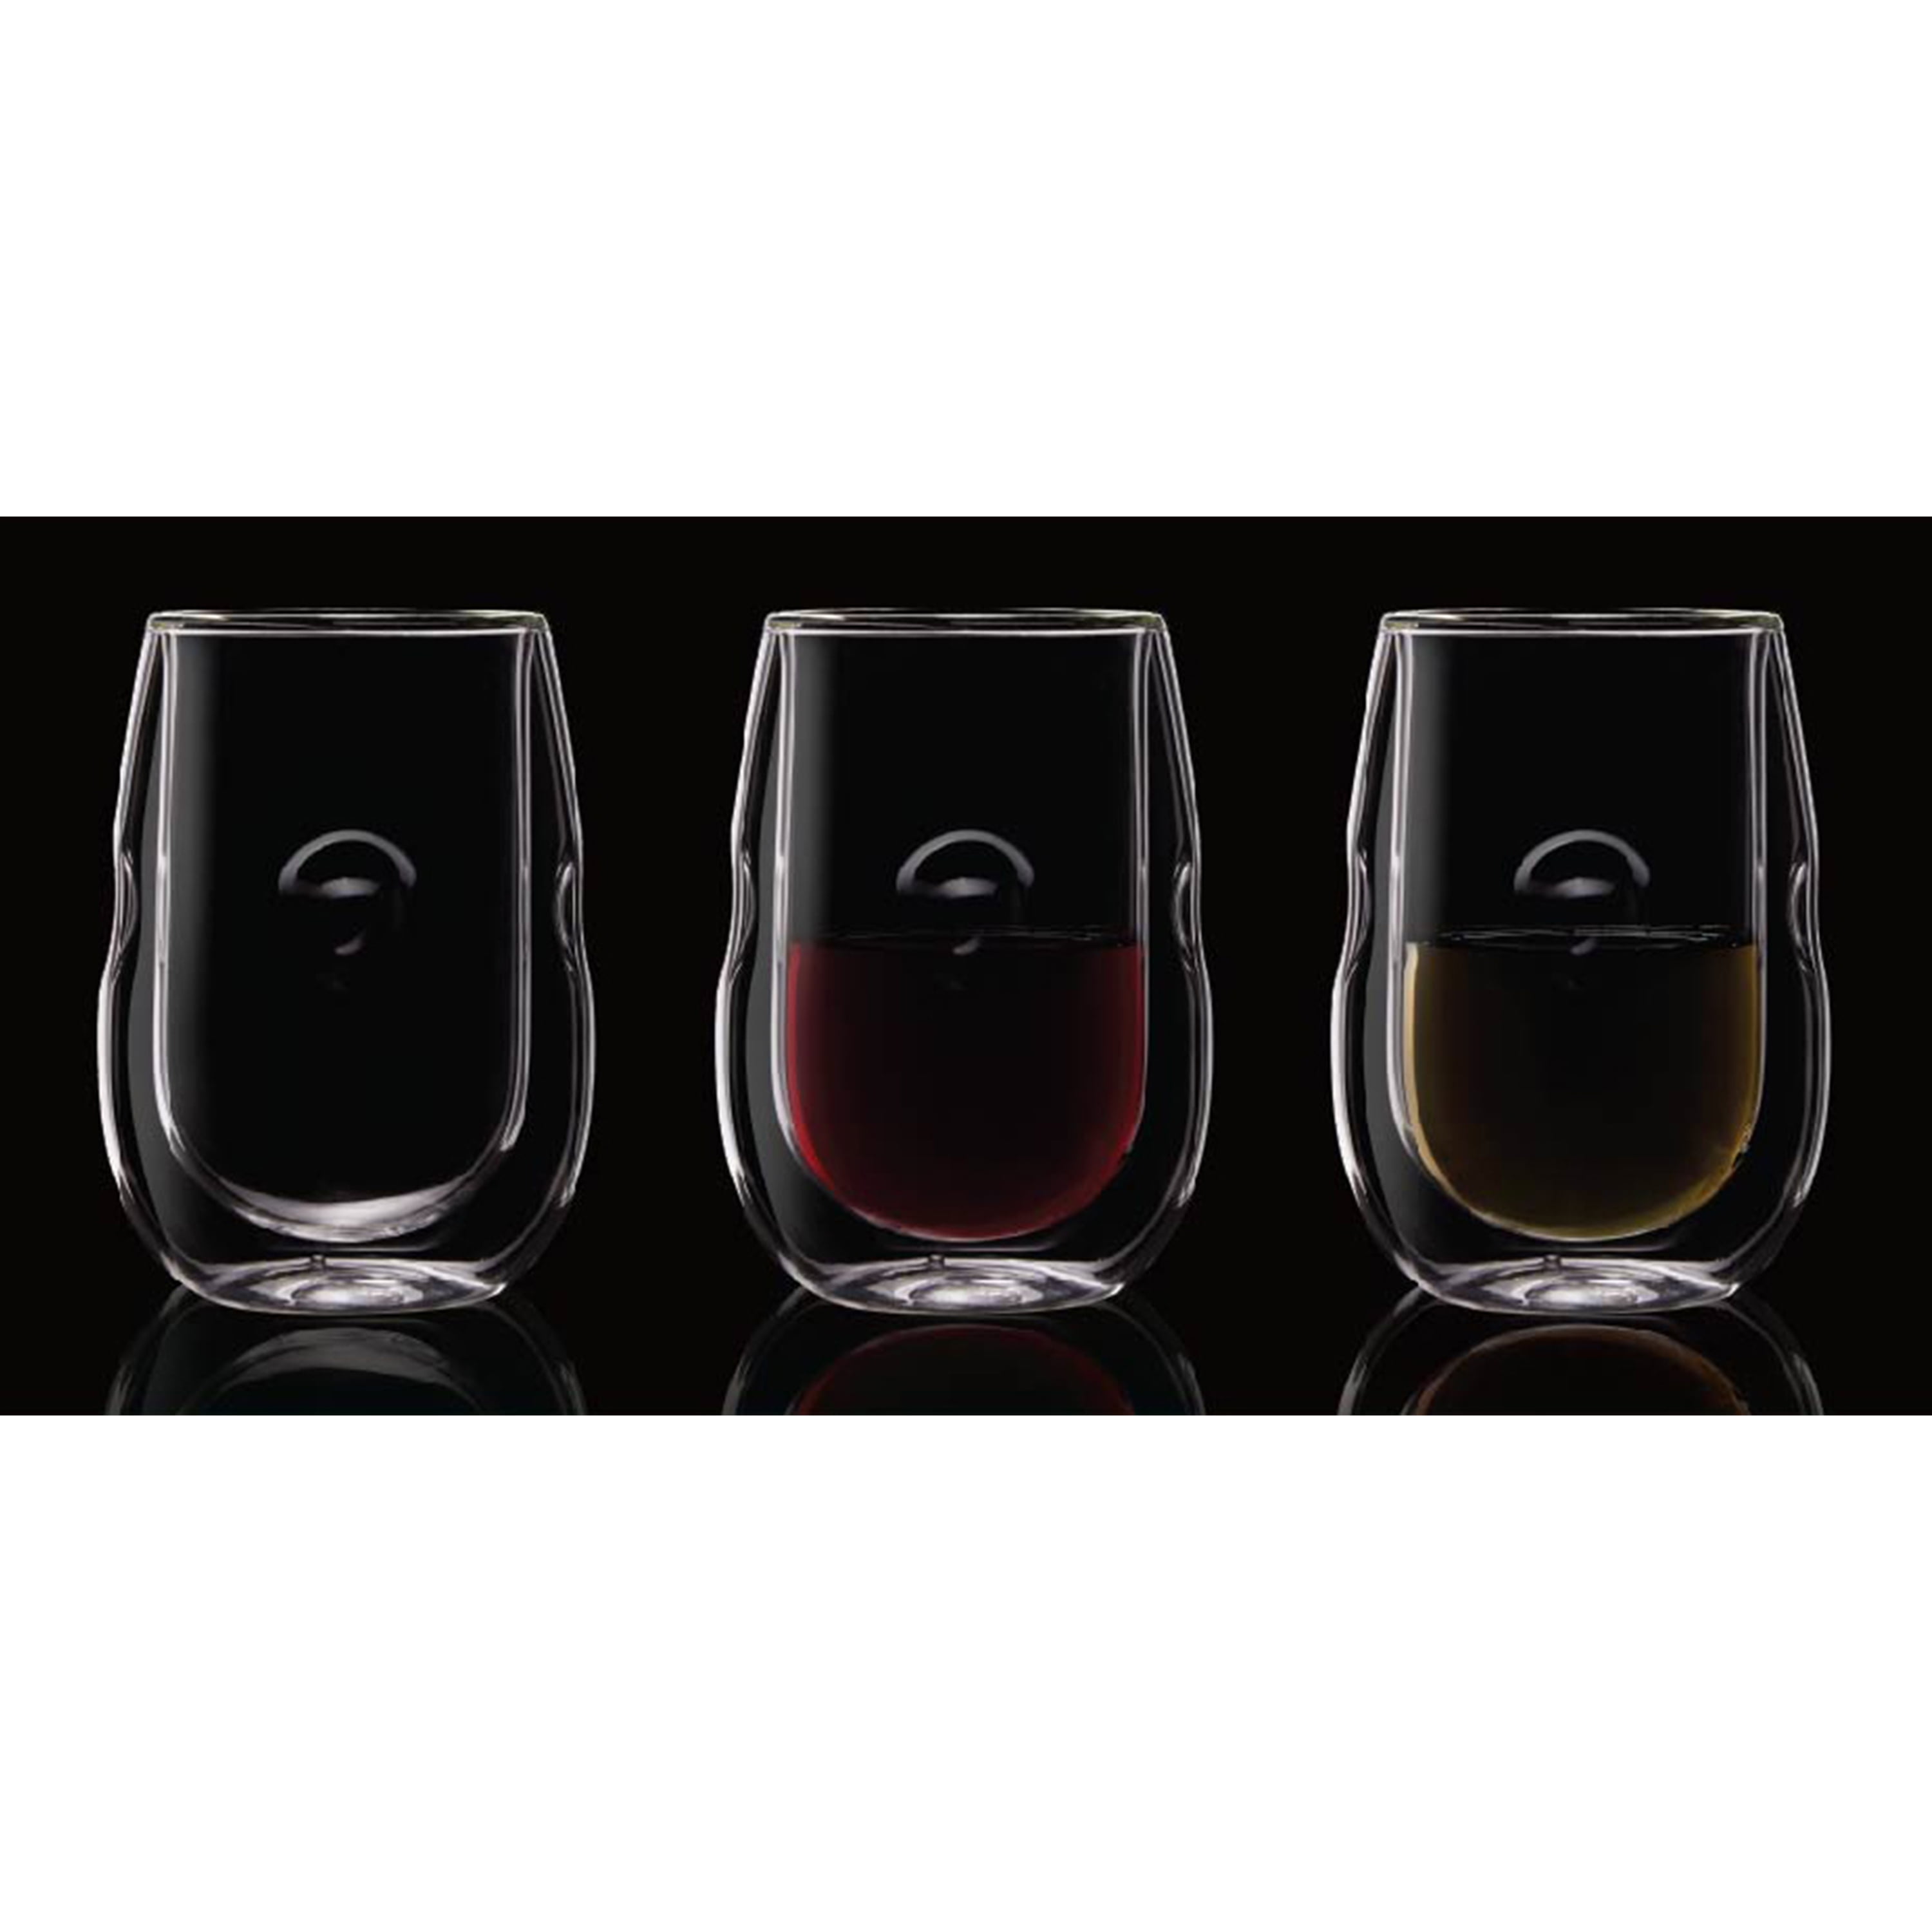 Moderna Artisan Series Double Wall 12 oz Beverage Glasses - Set of 8  Drinking Glasses, 1 - Kroger